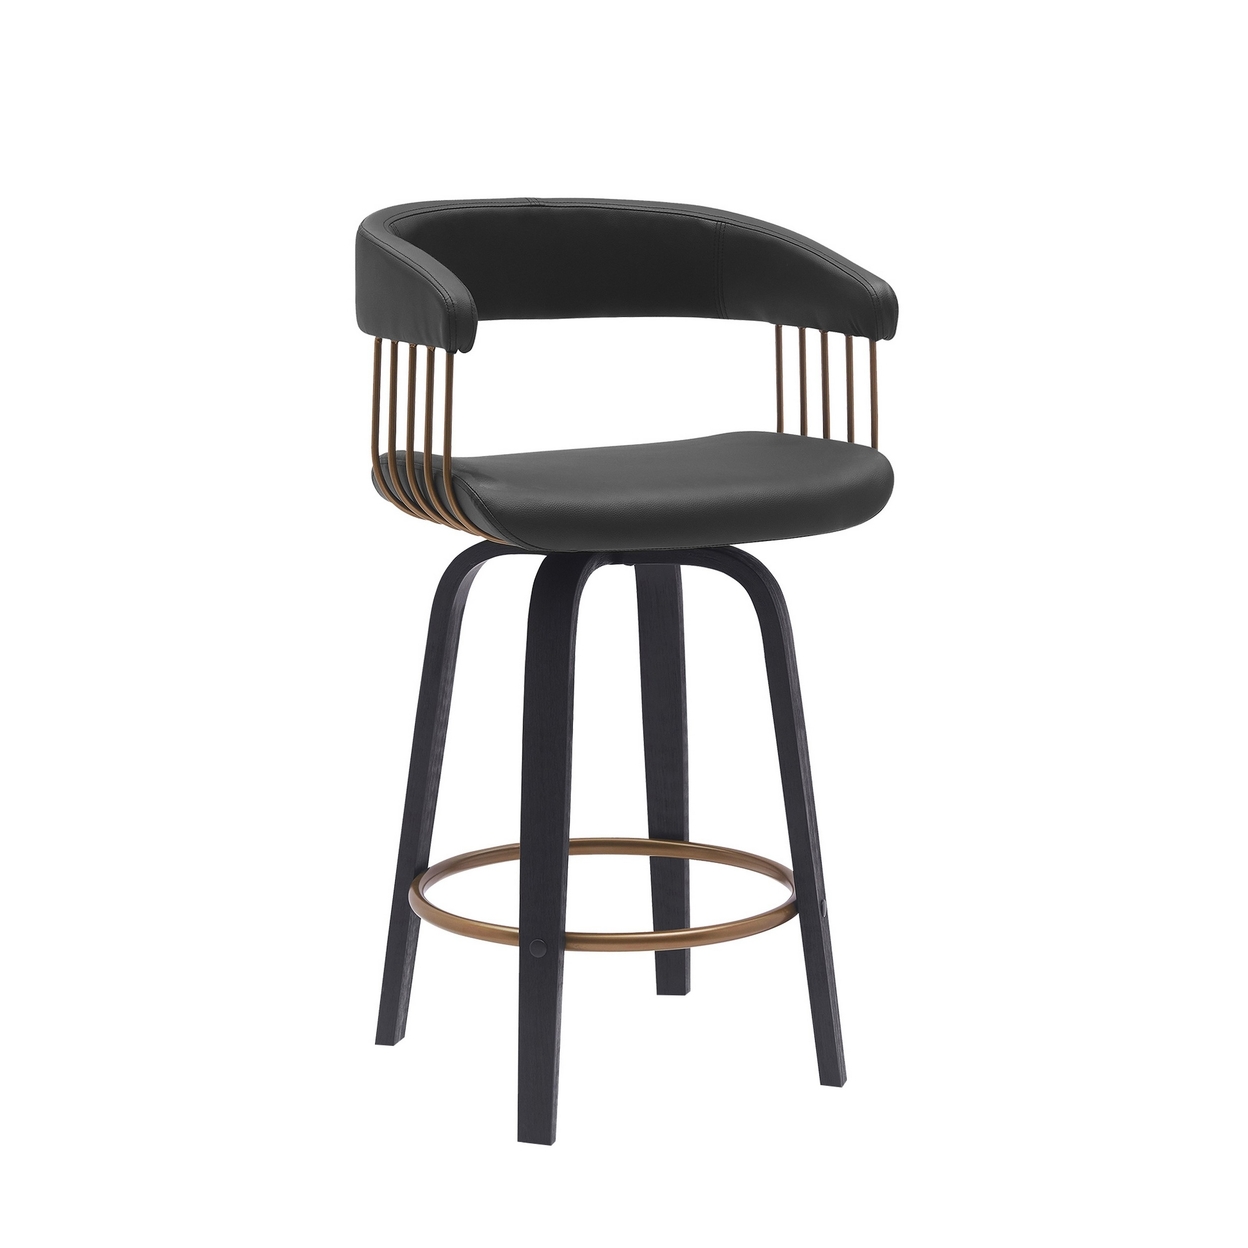 Maya 26 Inch Swivel Counter Chair, Black Faux Leather, Bronze Metal Slats - Saltoro Sherpi